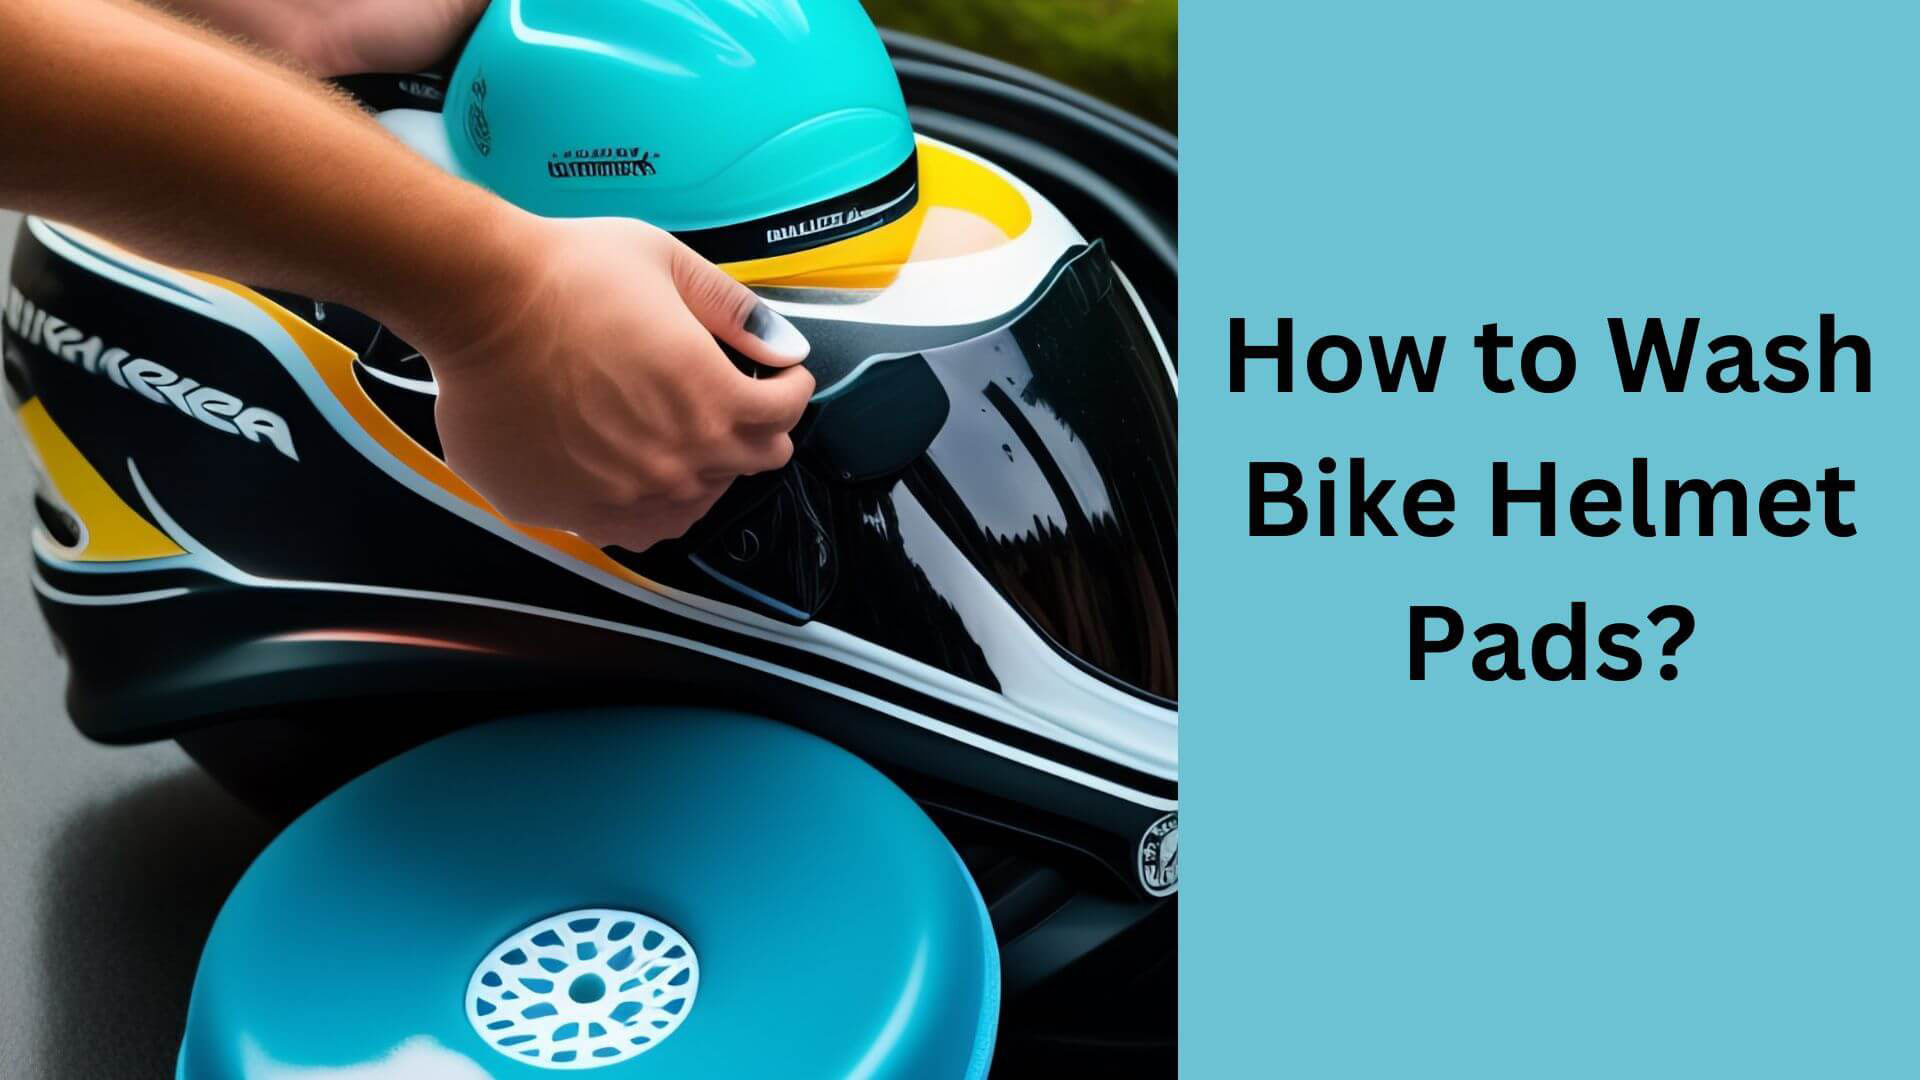 How to Wash Bike Helmet Pads?